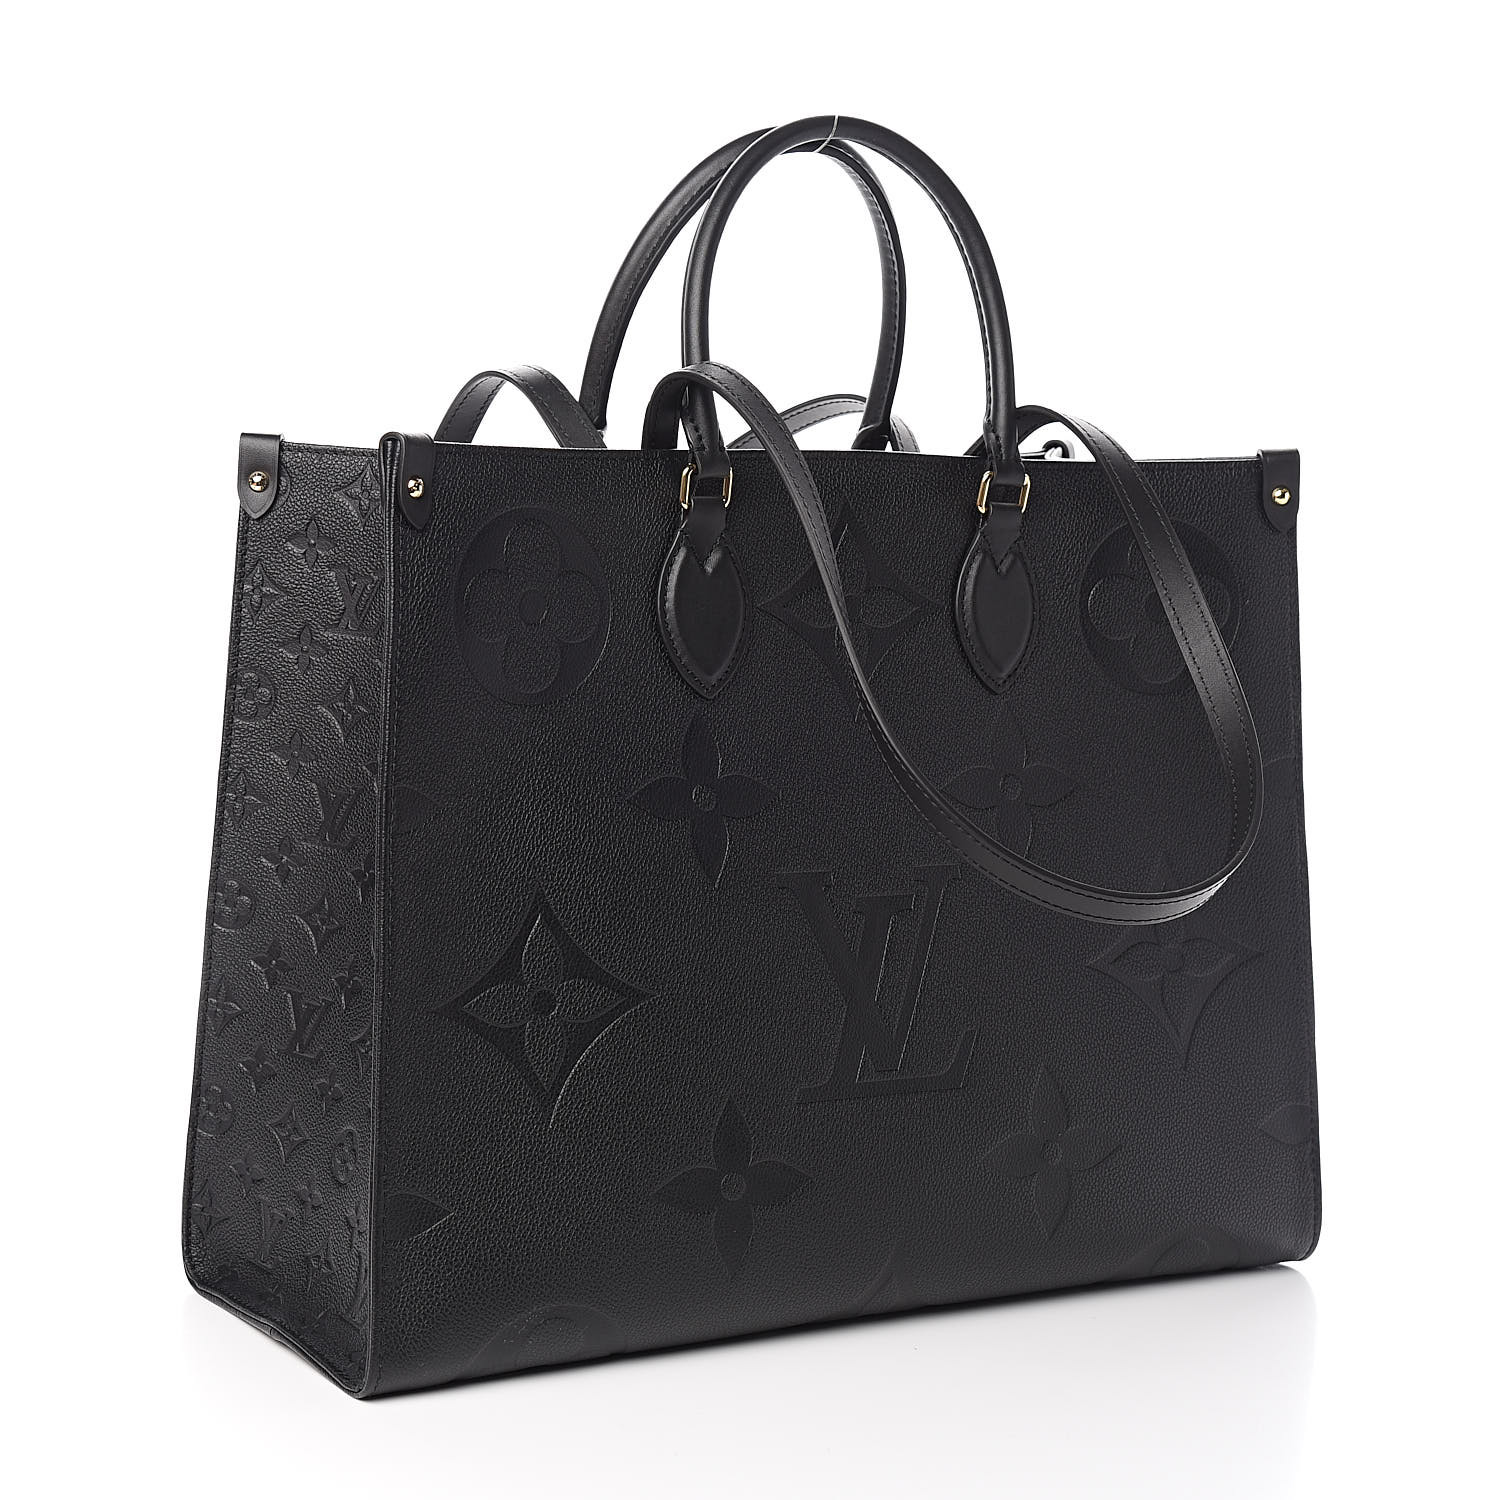 UNBOXING New Louis Vuitton Neverfull MM Monogram Empreinte Leather Bag